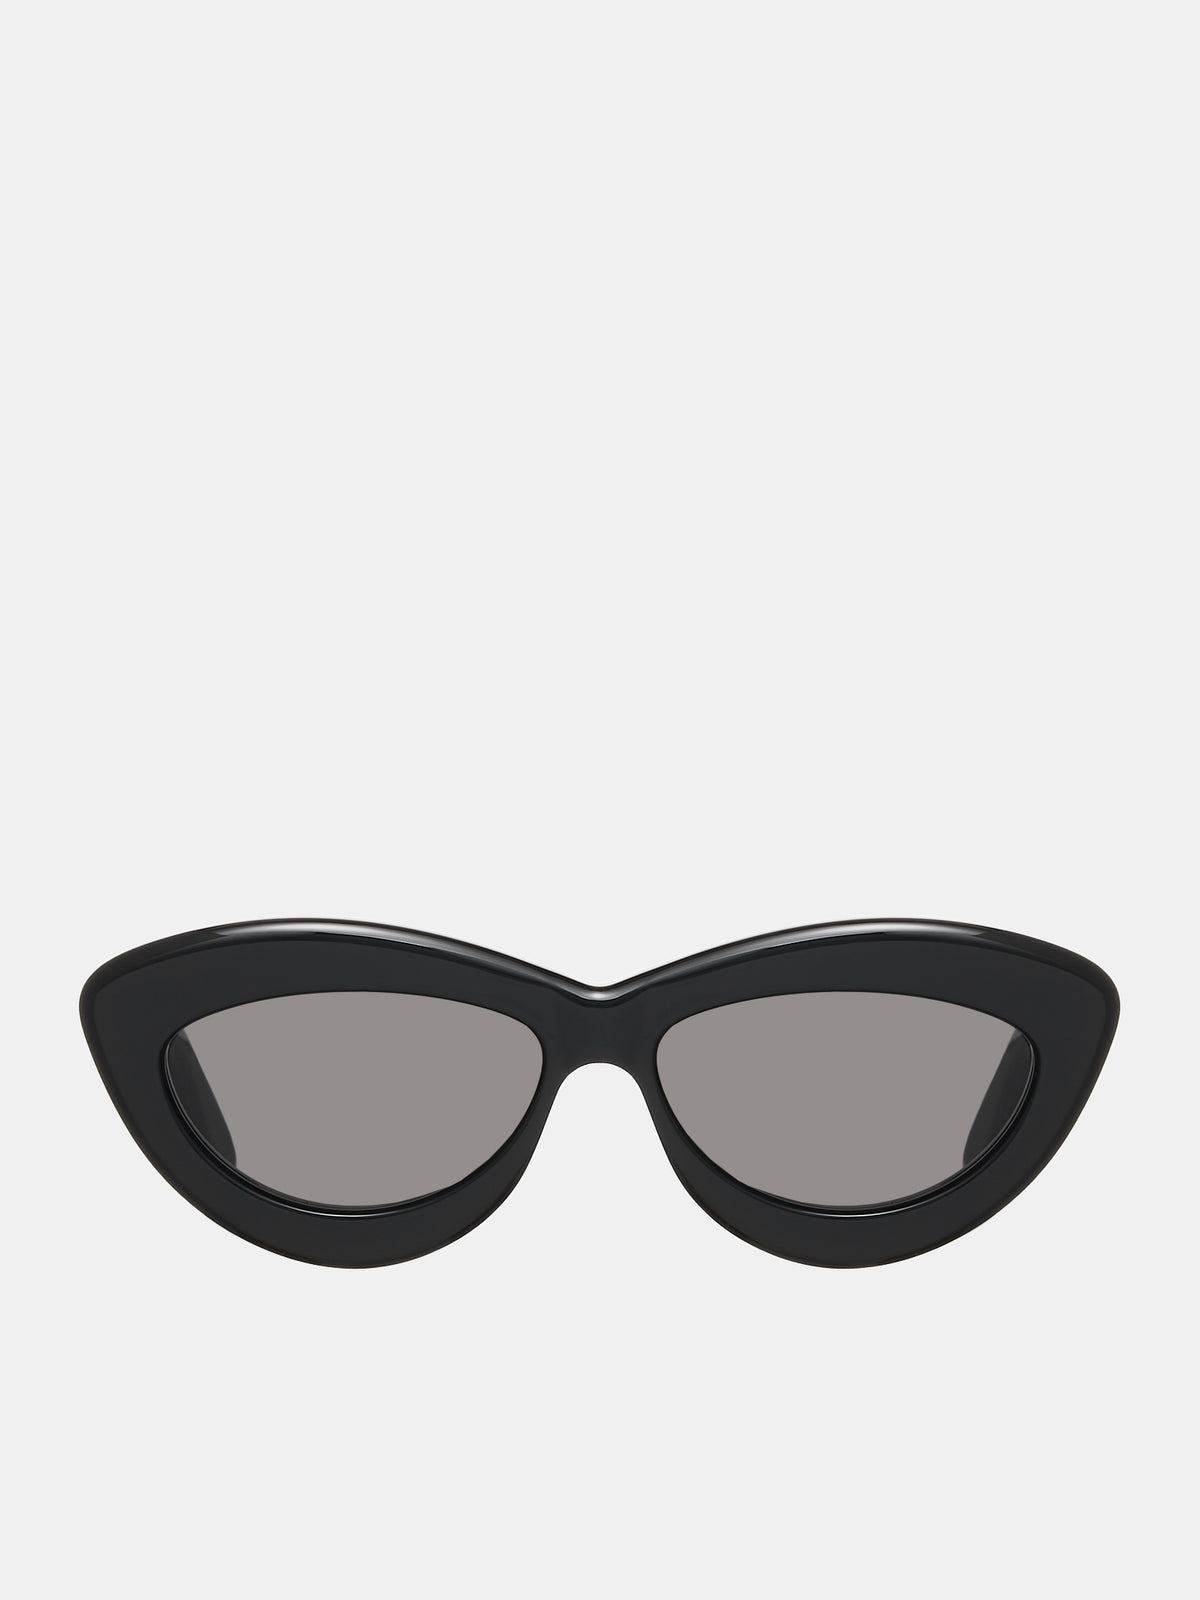 LOEWE Cateye Sunglasses | H. Lorenzo - front